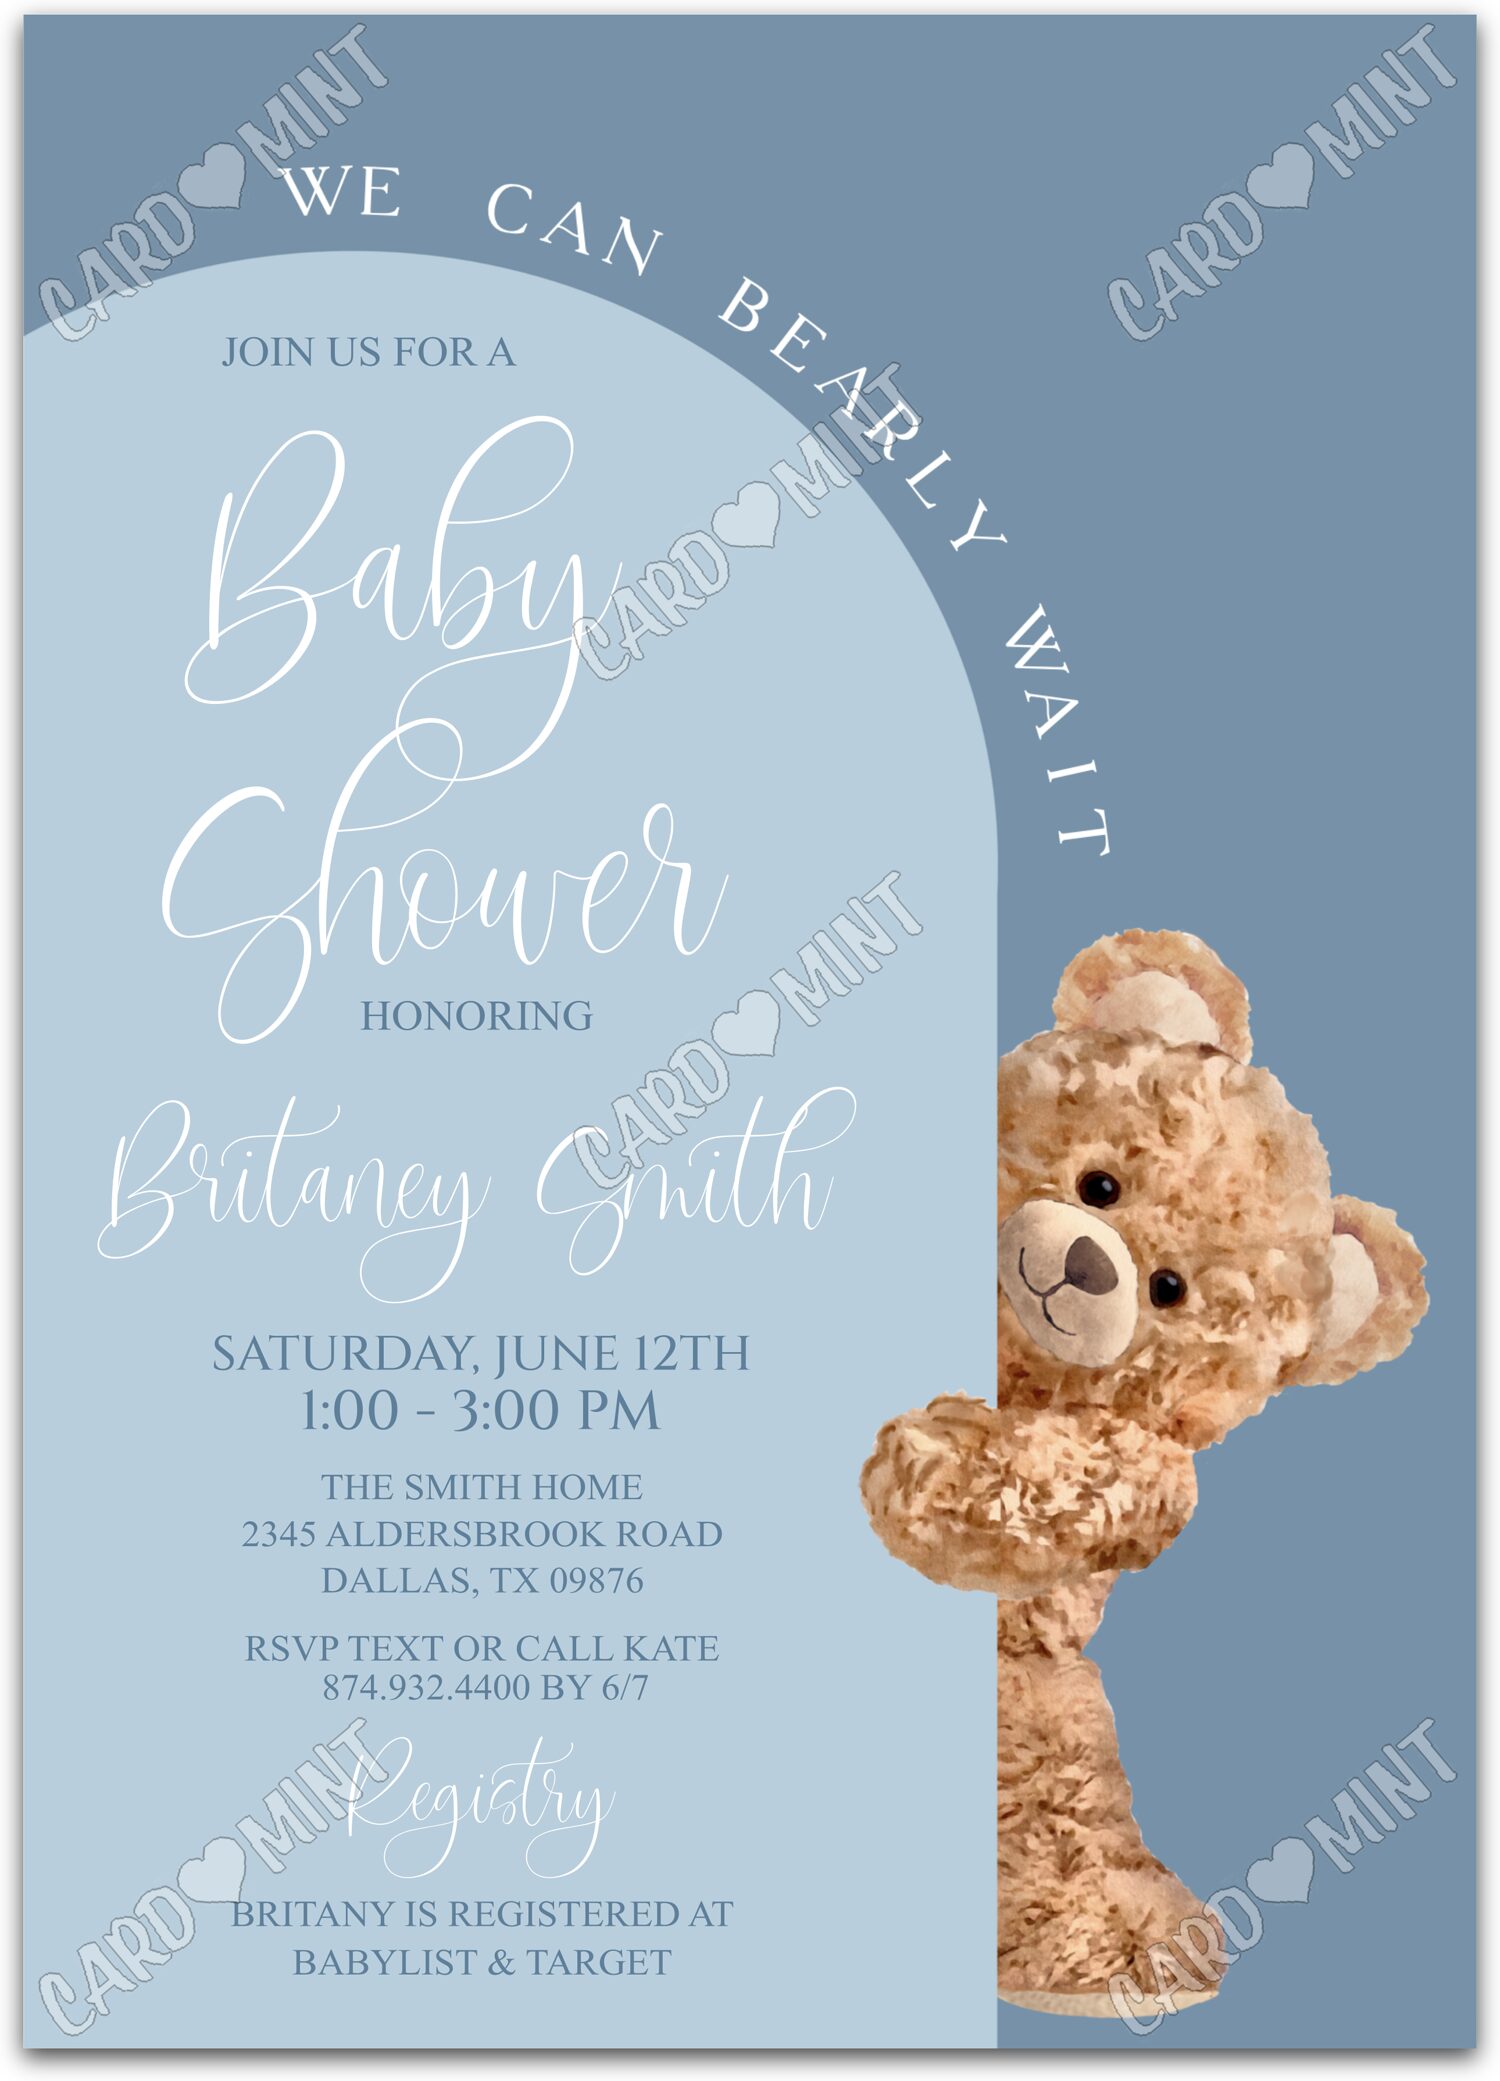 Editable Bearly Wait blue peek-a-boo teddy bear boy Baby Shower 5"x7" Invitation EV1136